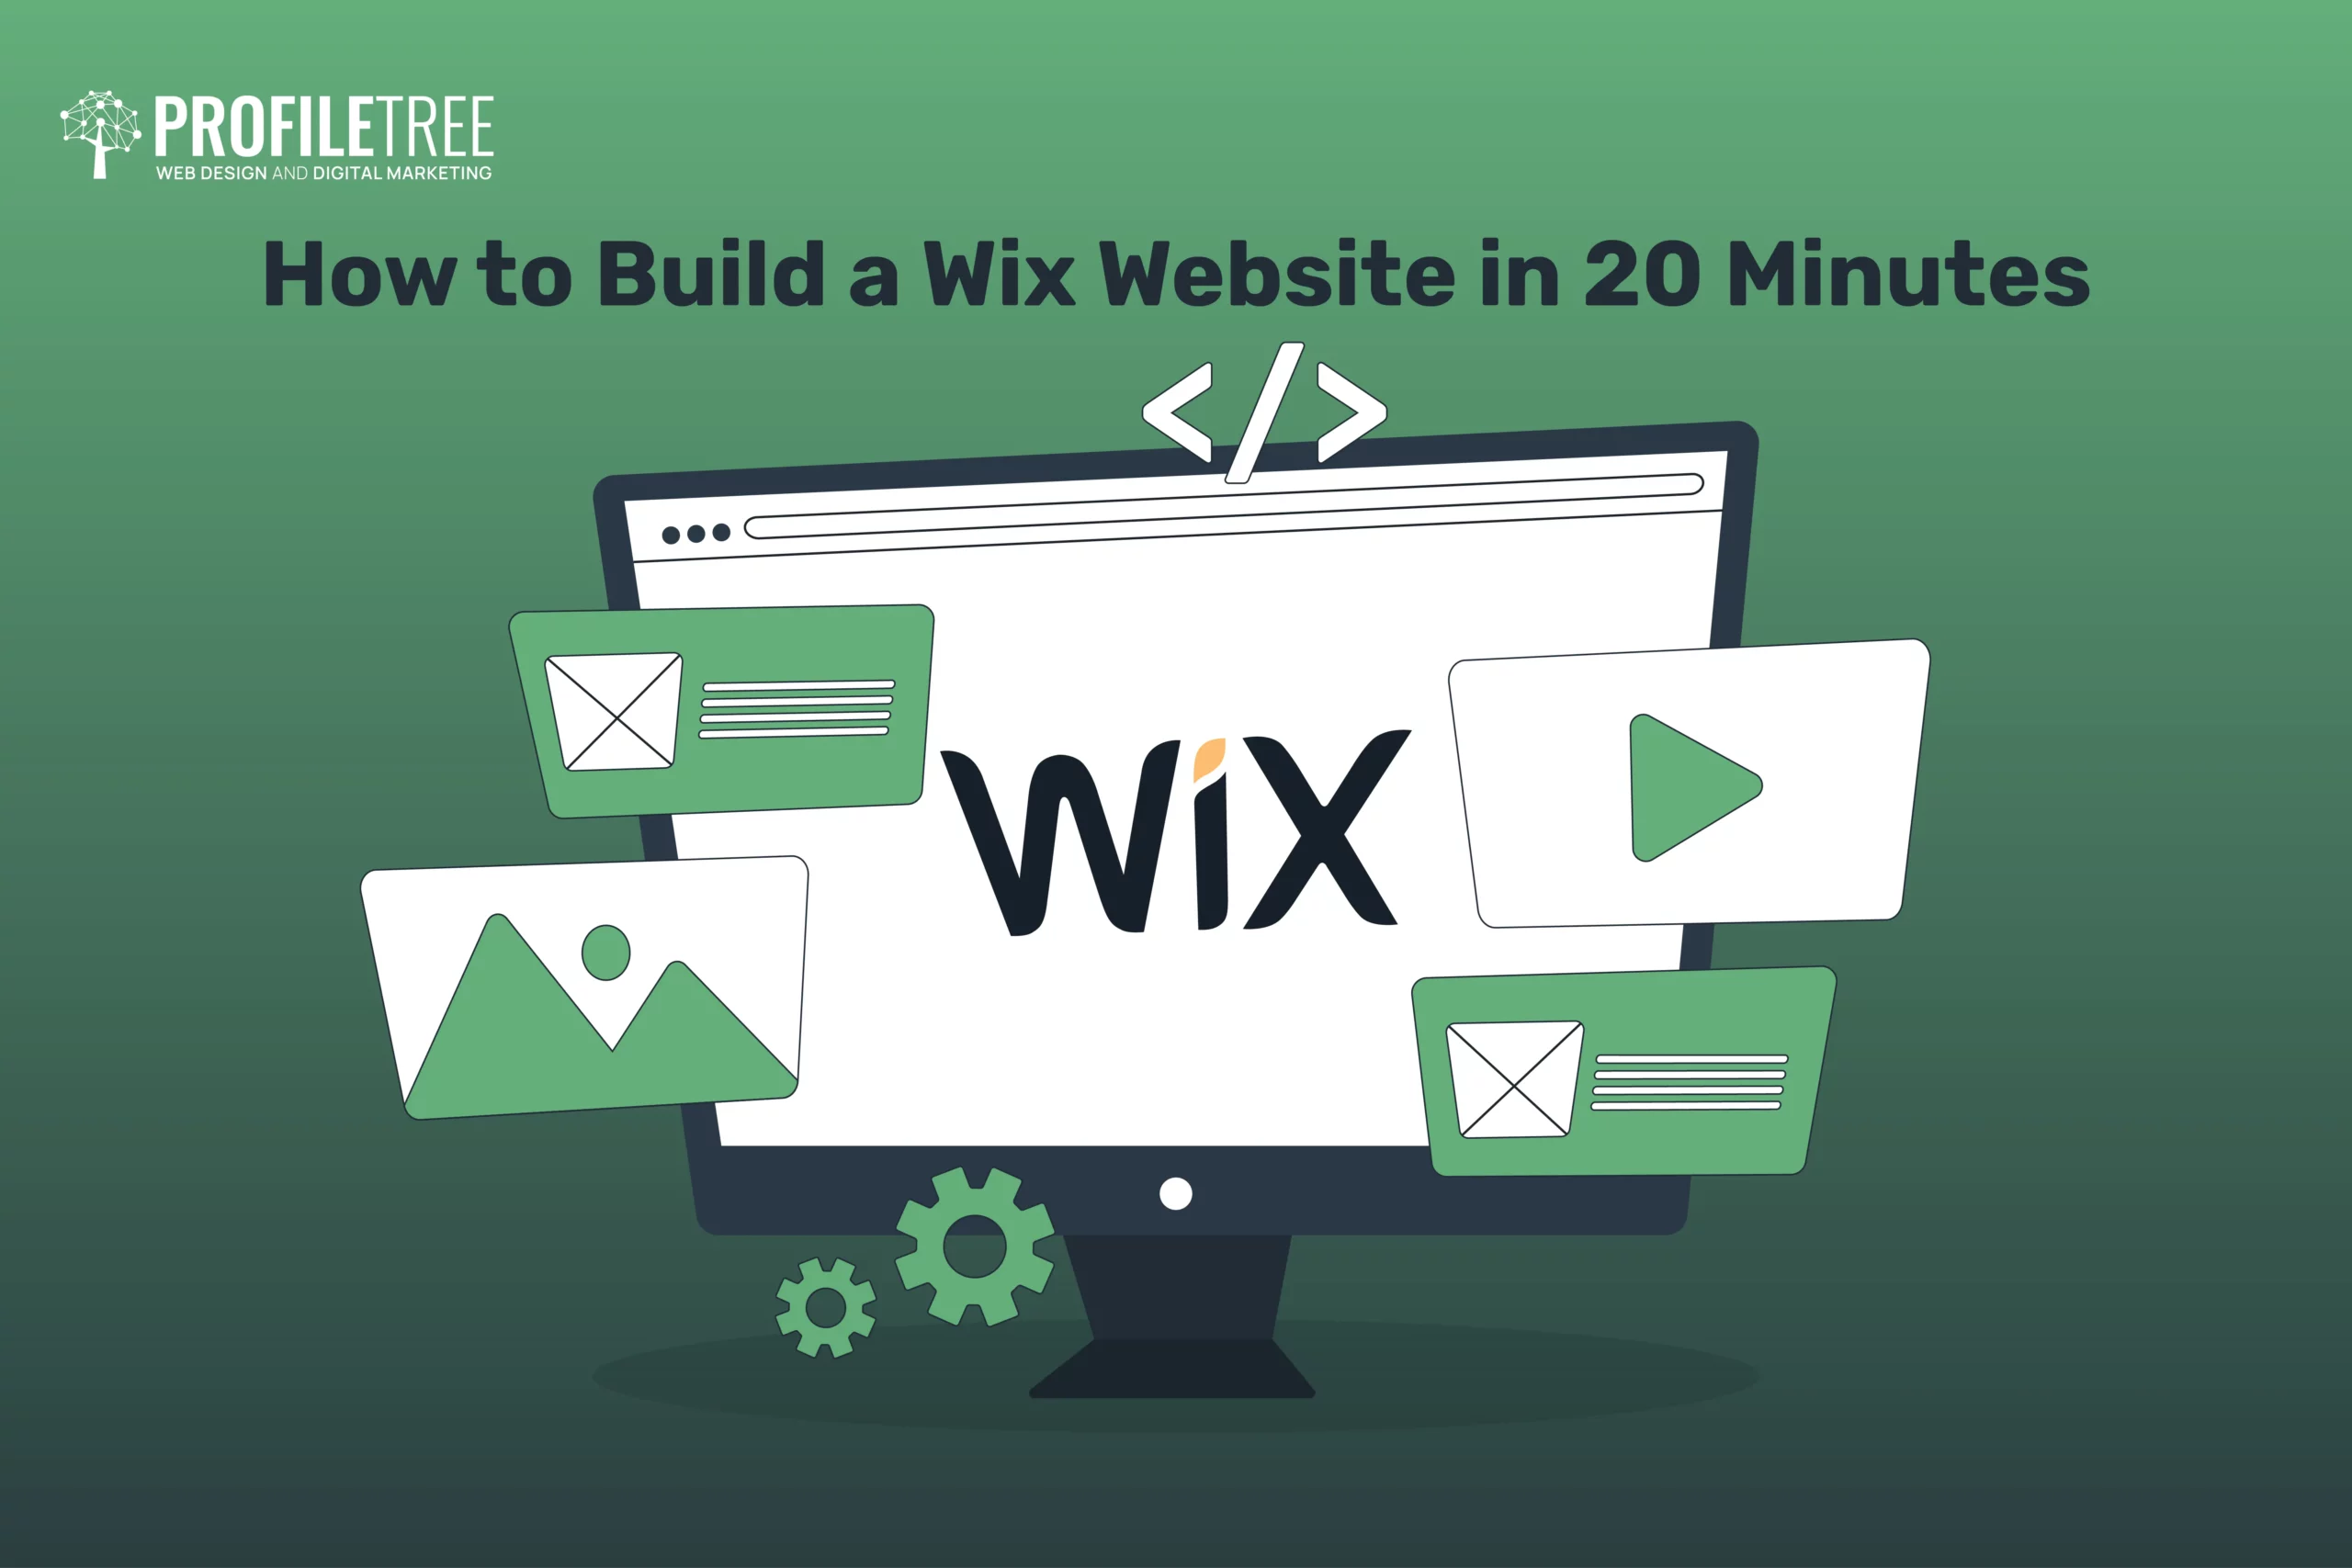 How to build a Wix website